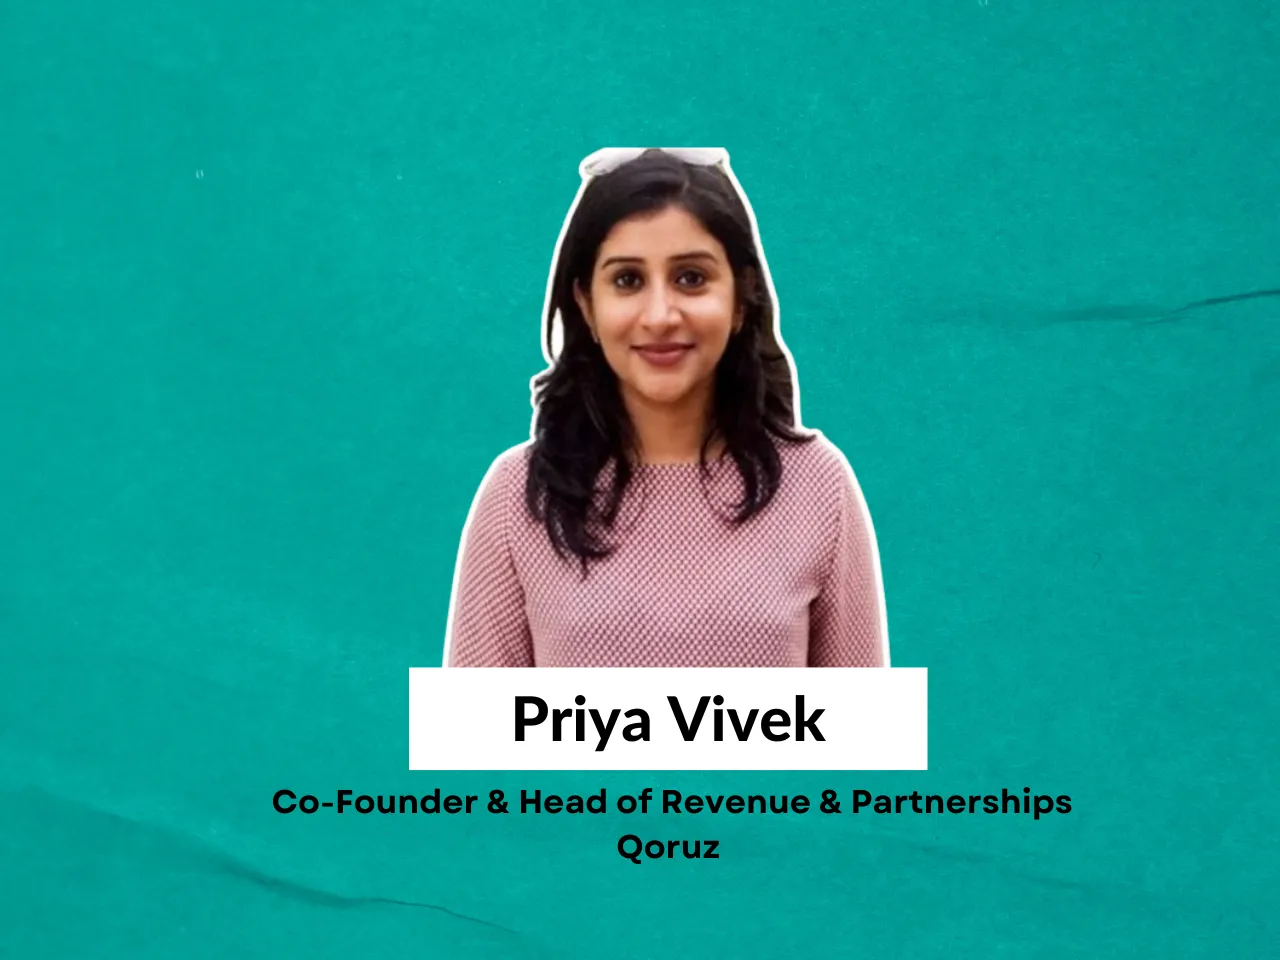 Priya Vivek